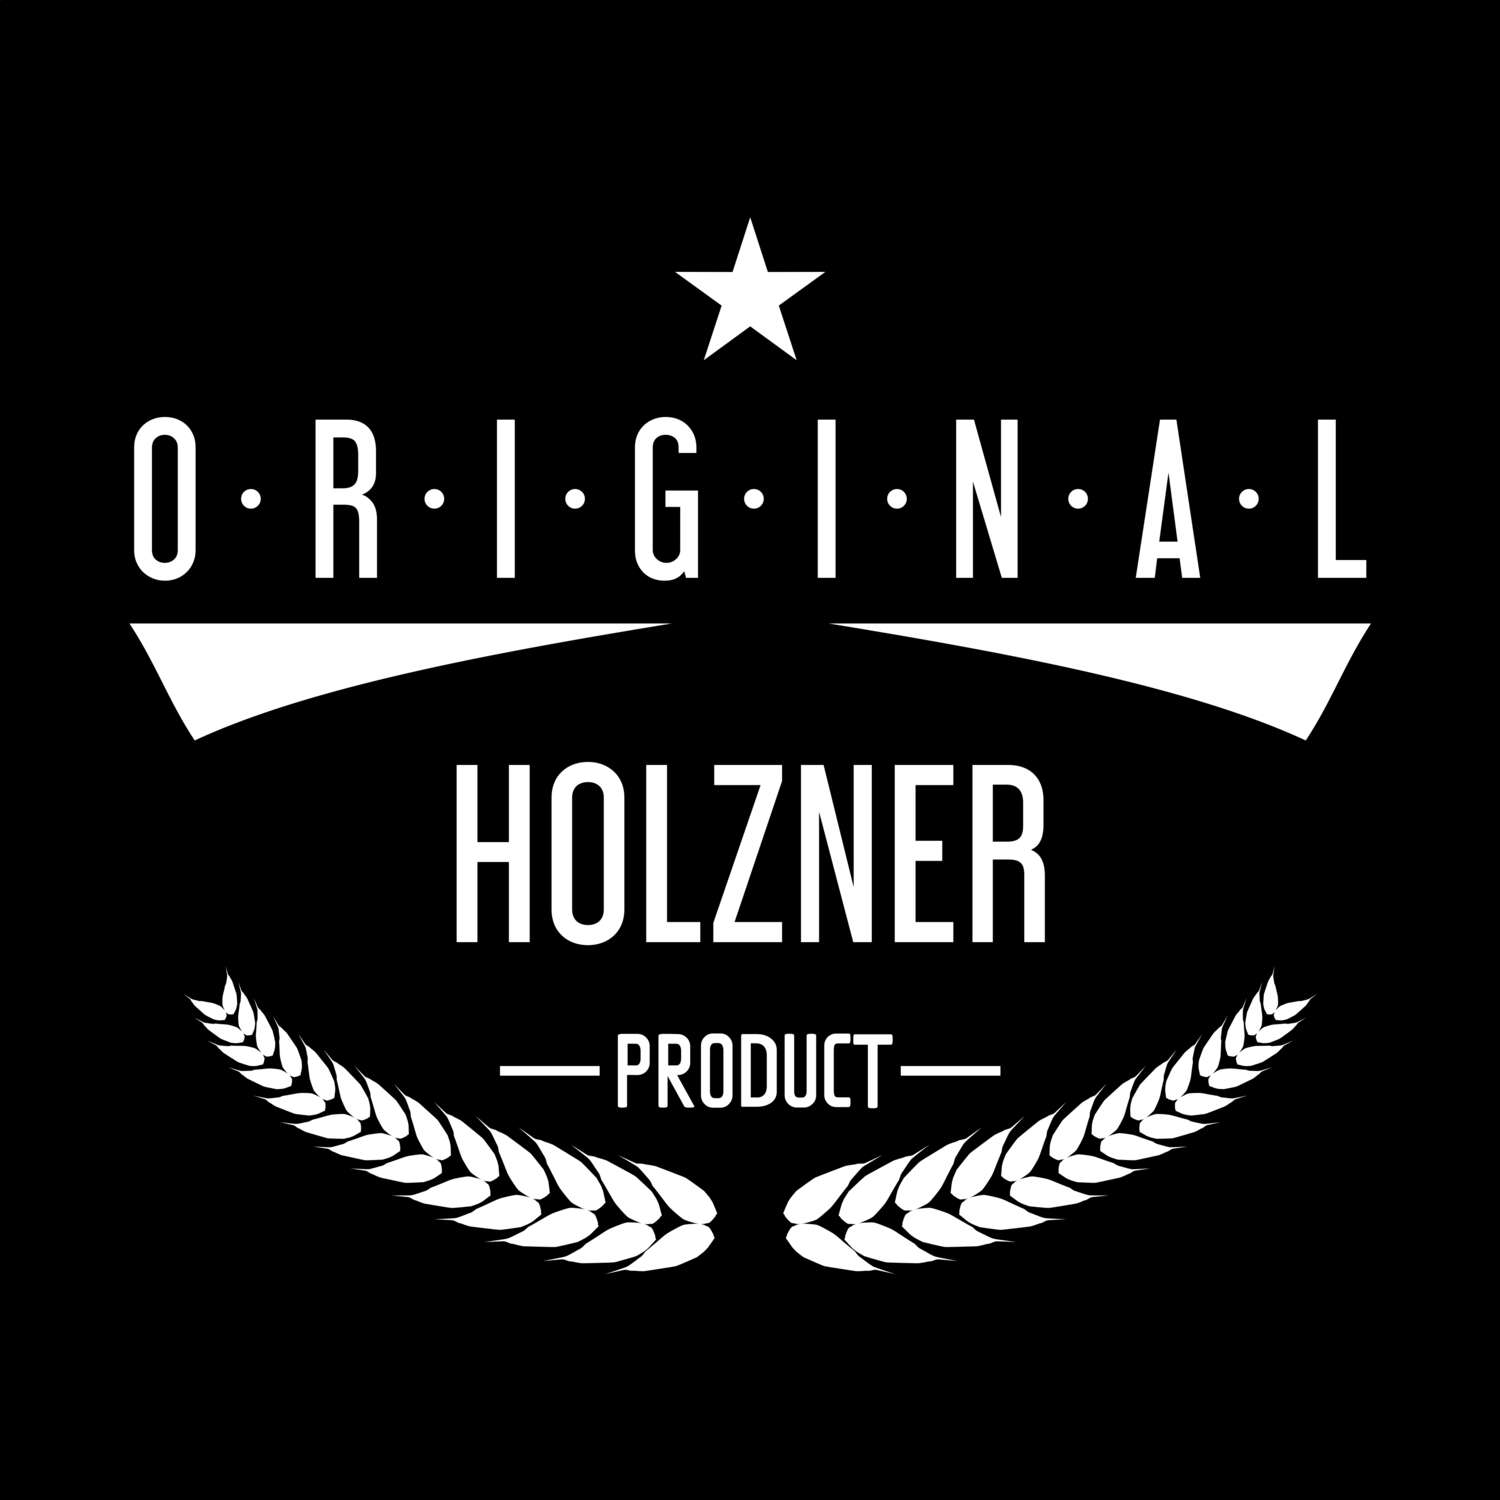 Holzner T-Shirt »Original Product«